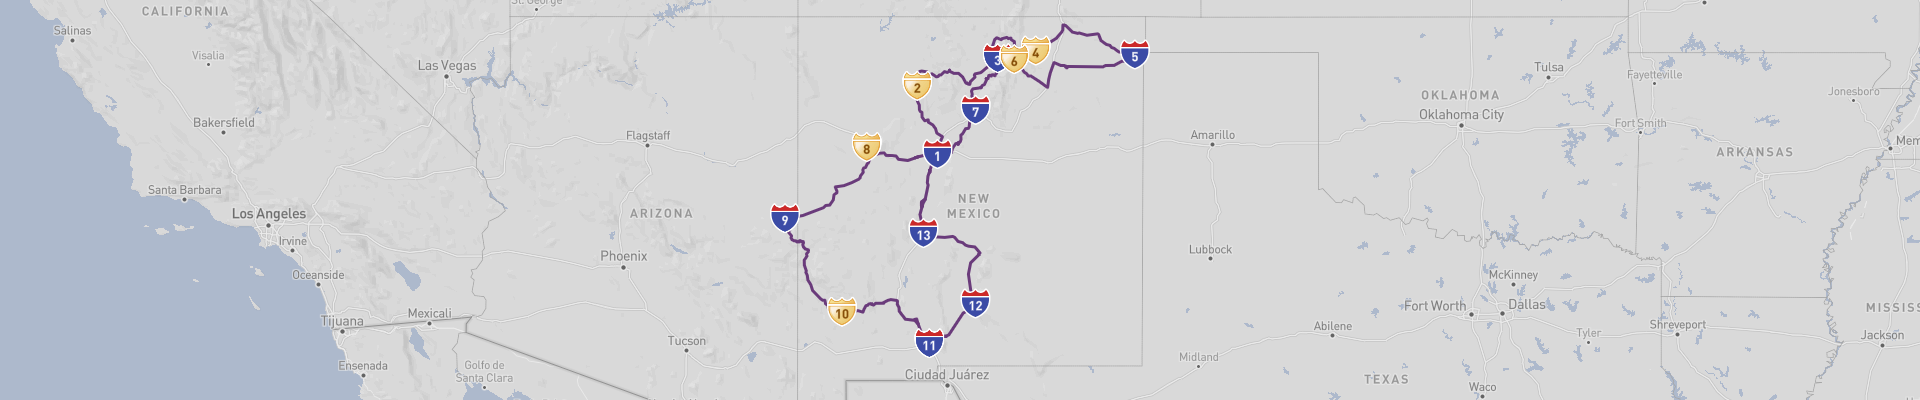 New Mexico Road Trip